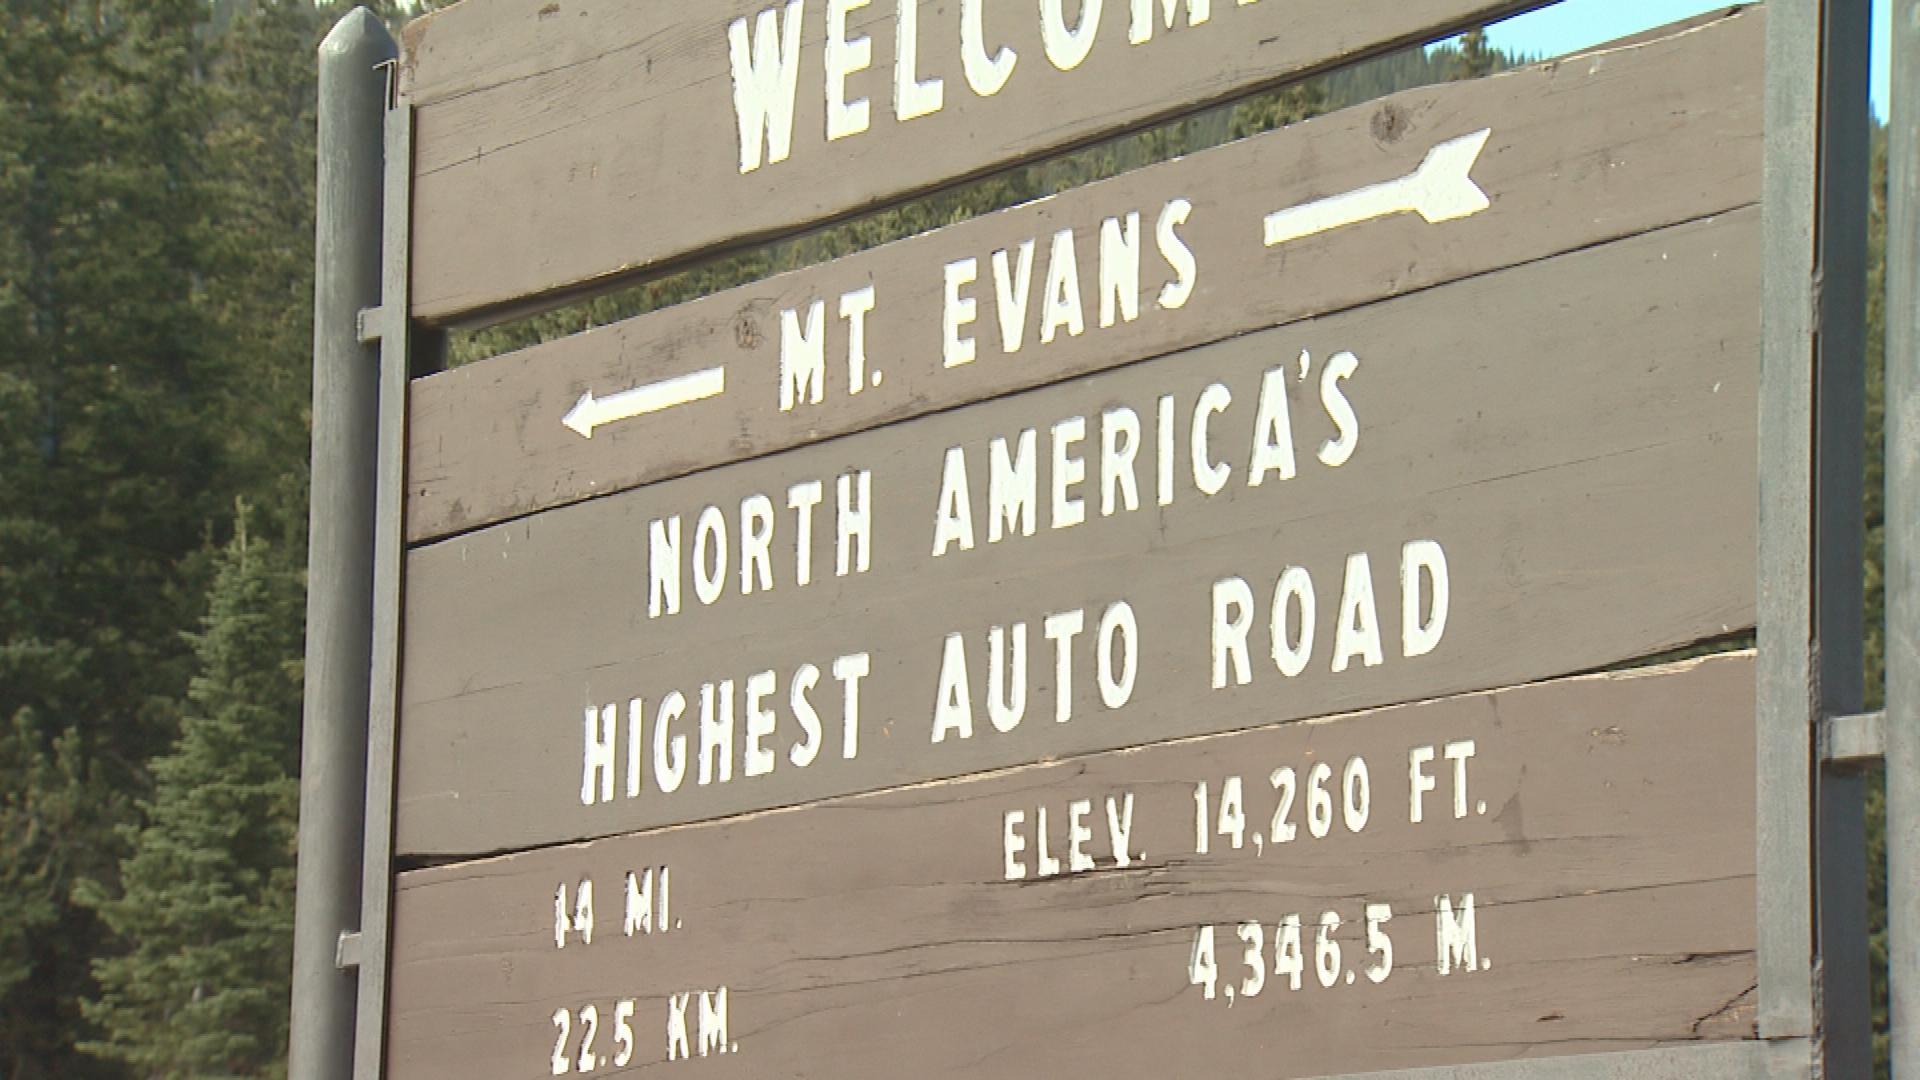 Mount Evans Road